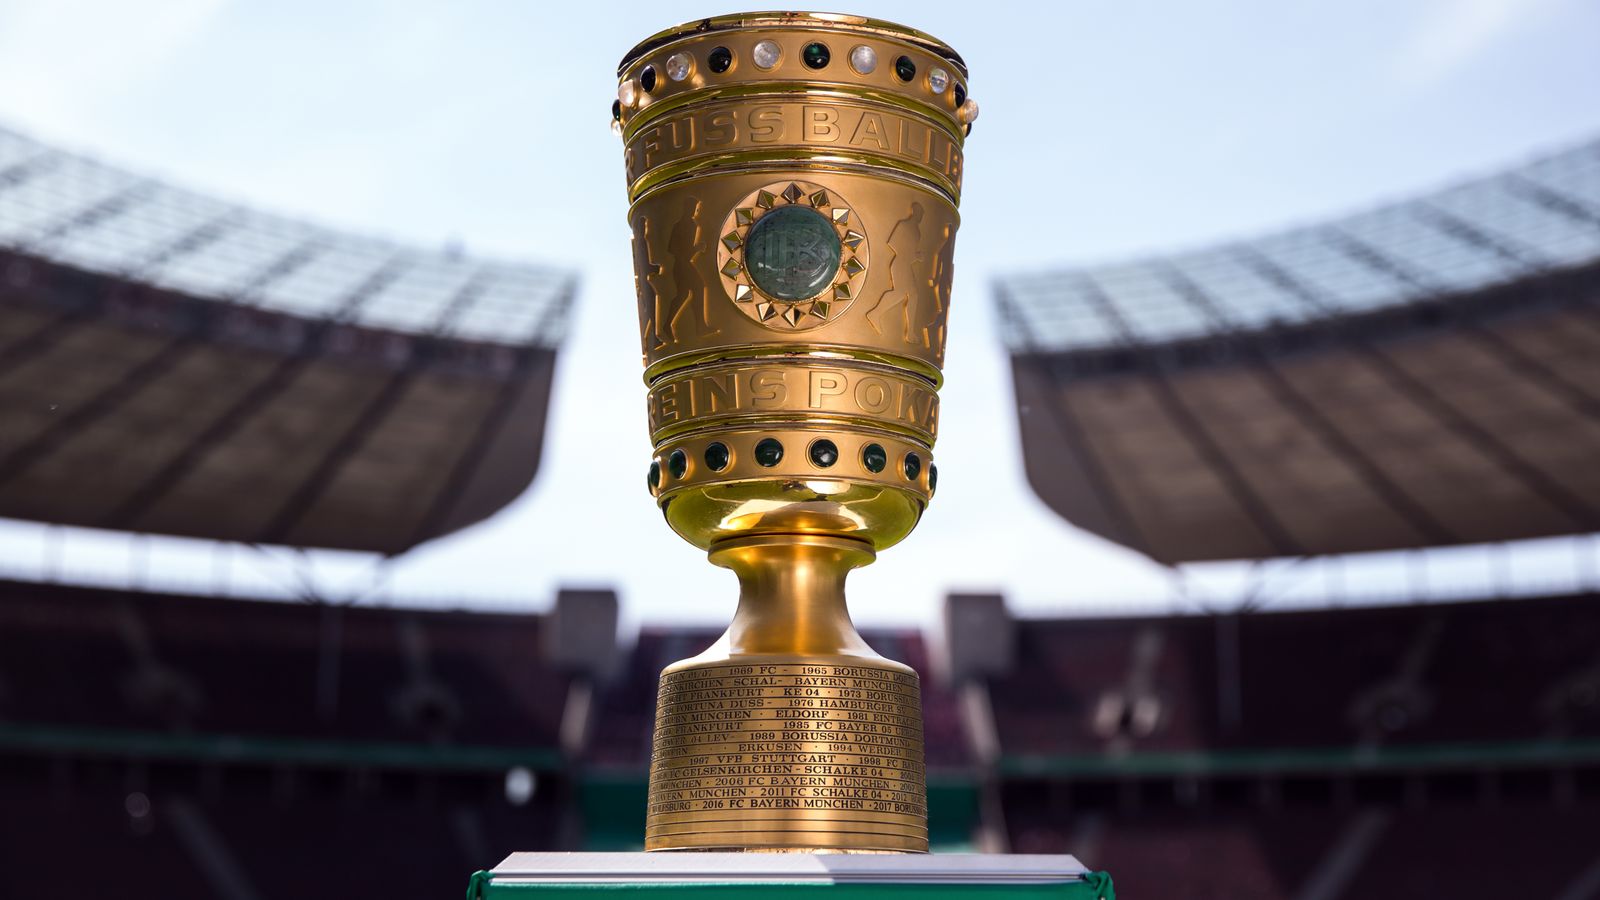 Dfb Pokal Opponents Of Schalke And Eintracht Frankfurt Are Certain Football News World Today News